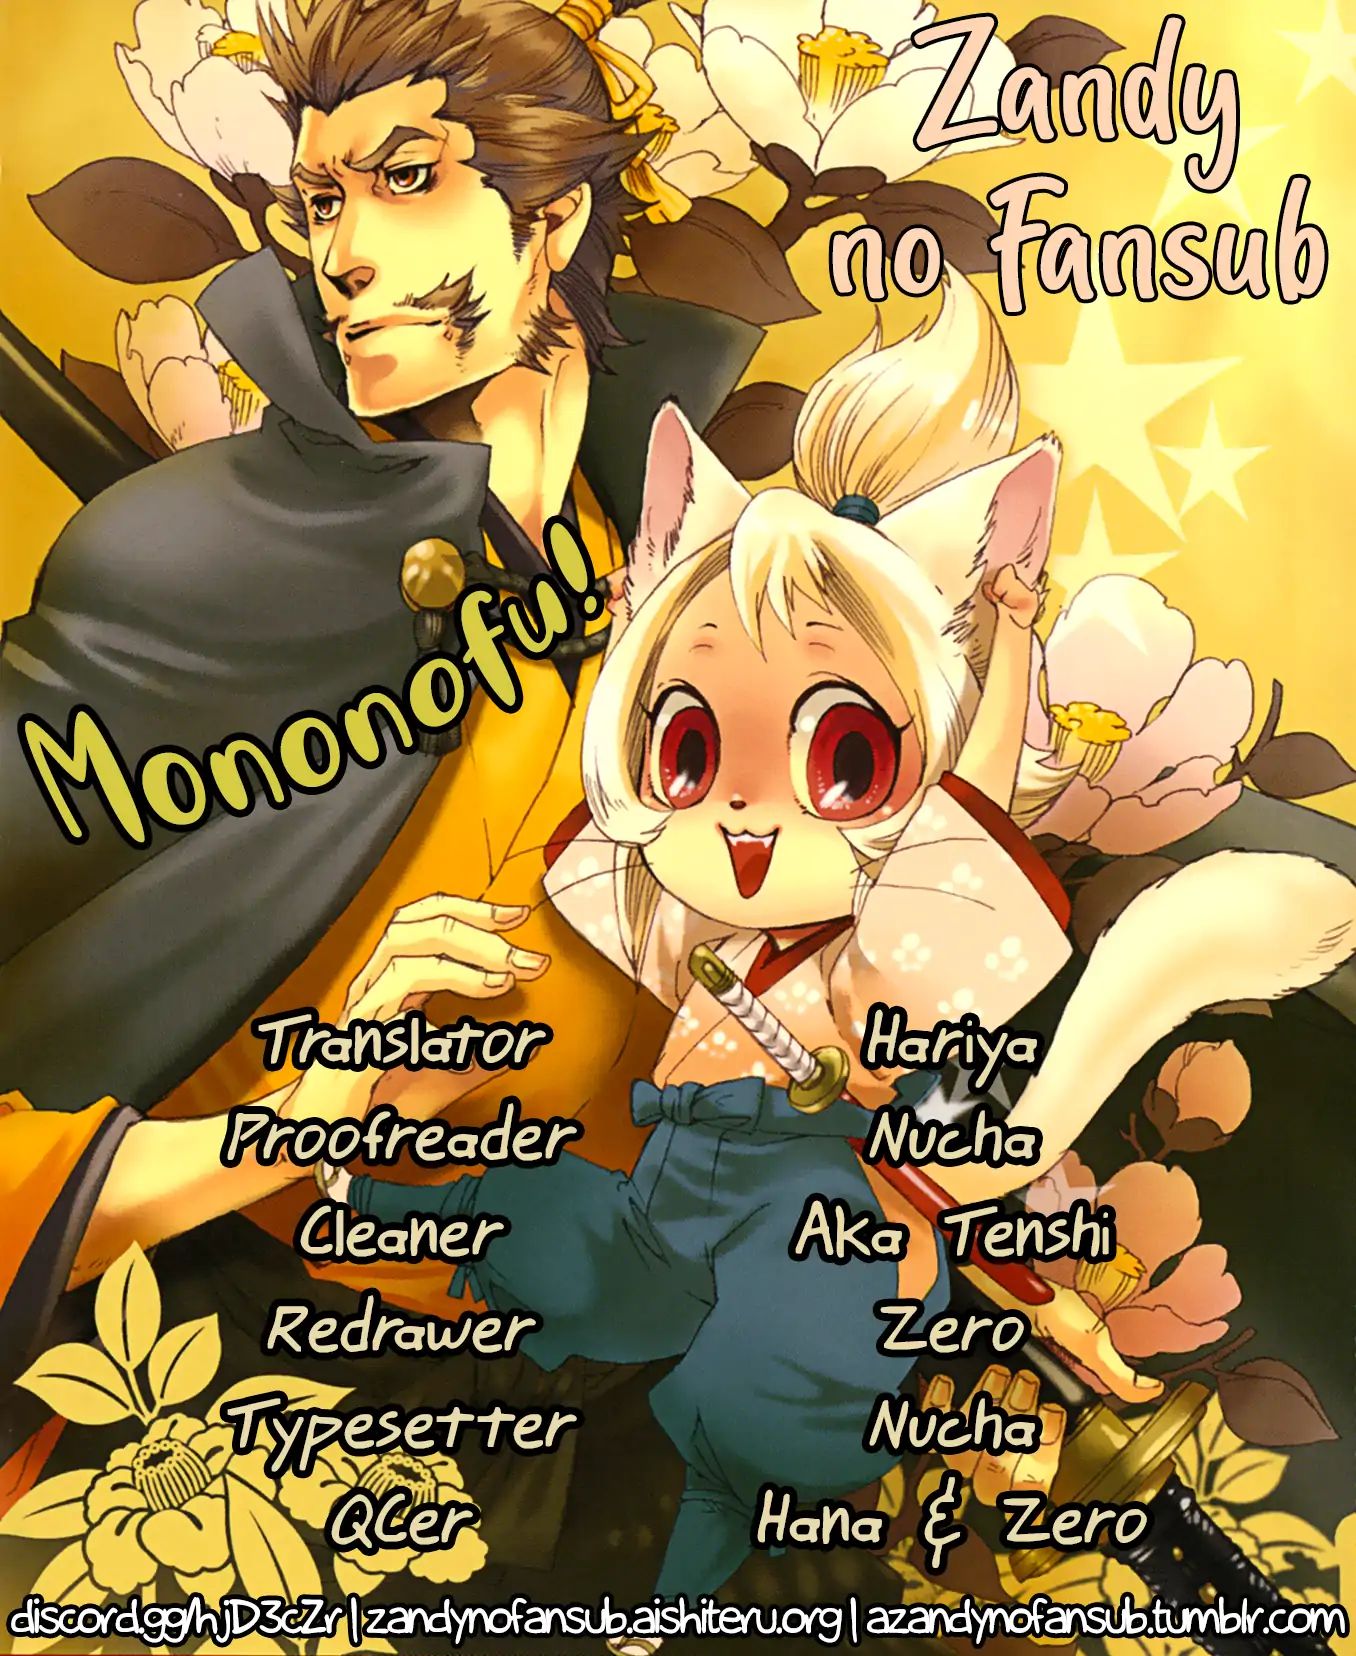 Mononofu! (Hayate Kuku) - Page 1